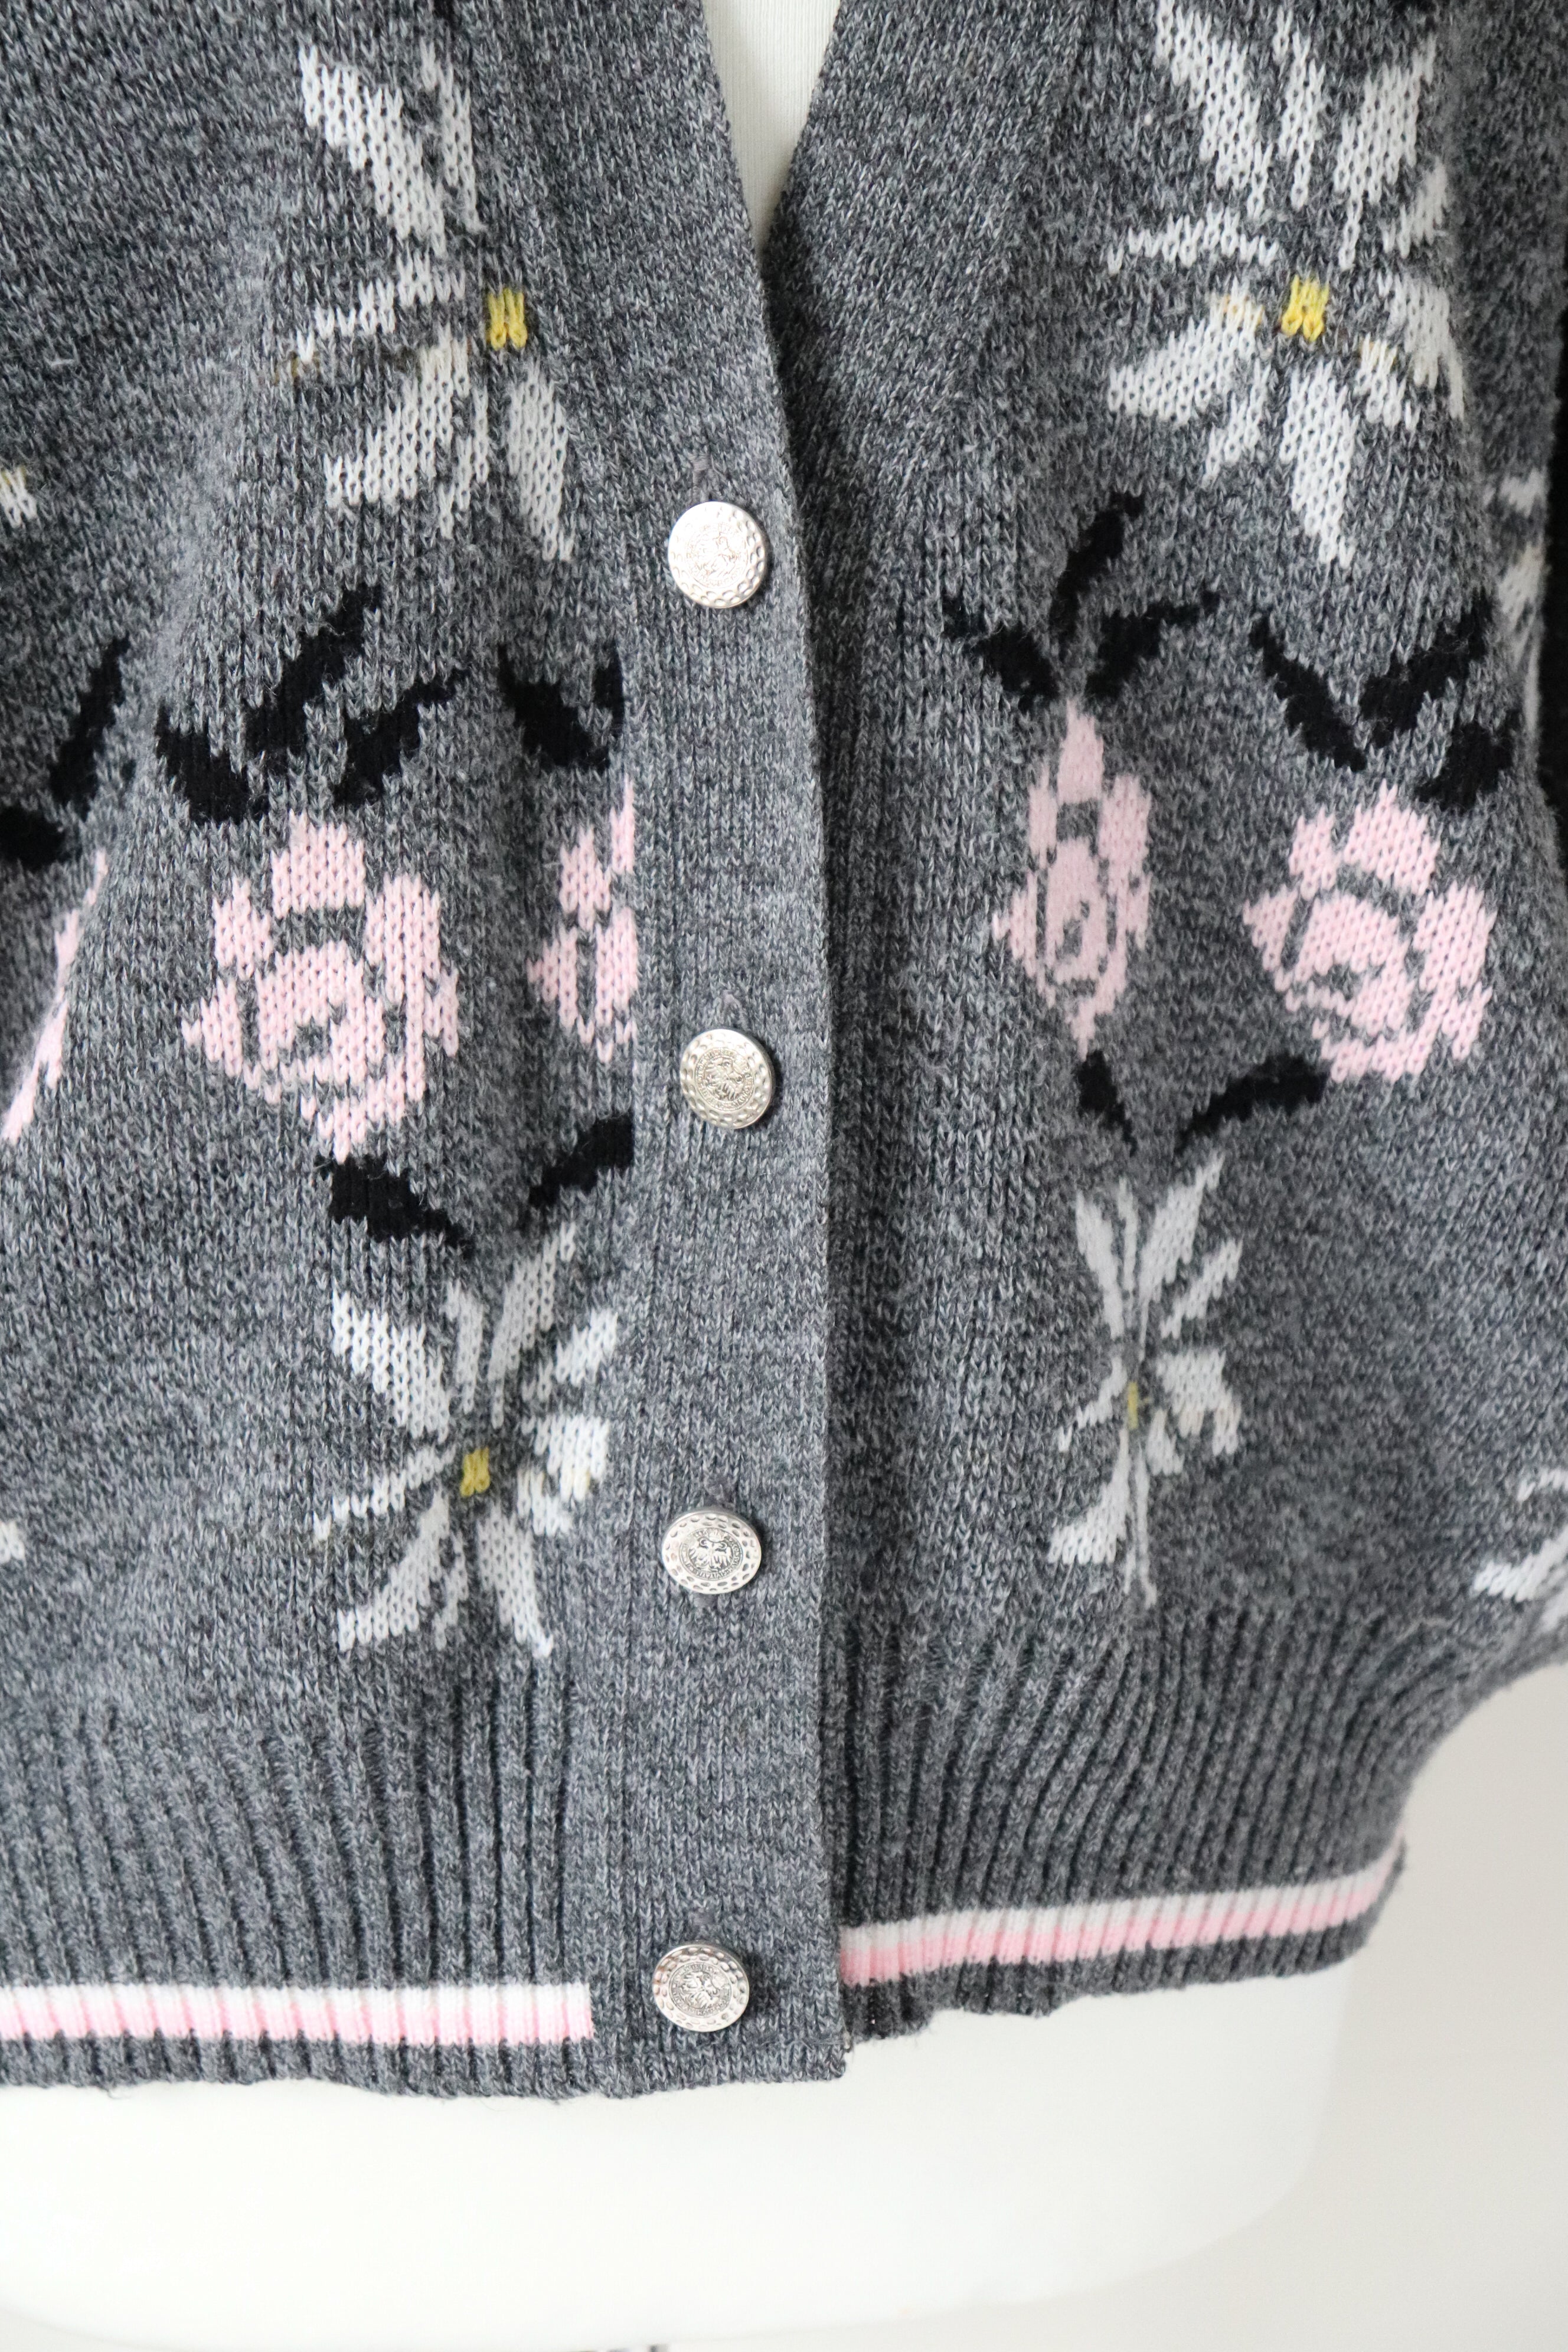 Vintage Cardigan - Grey / Pink Floral  - Acrylic - Oversized M / L -  UK 12 / 14